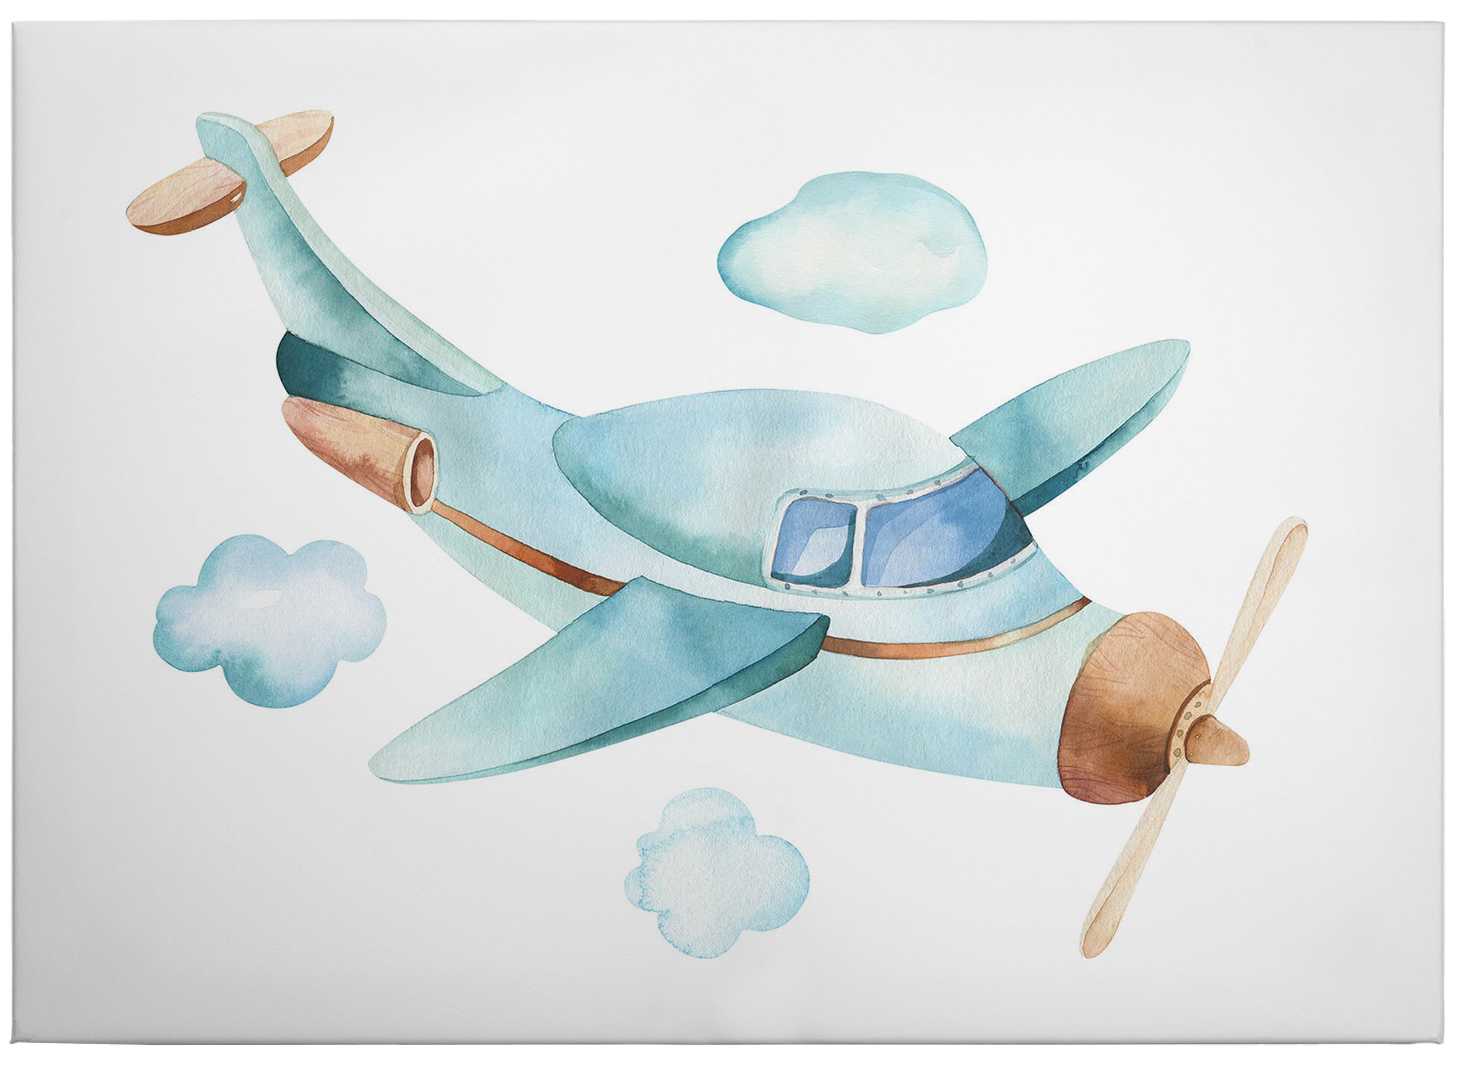             Cuadro avión acuarela nubes cielo by Kvilis - 0,70 m x 0,50 m
        